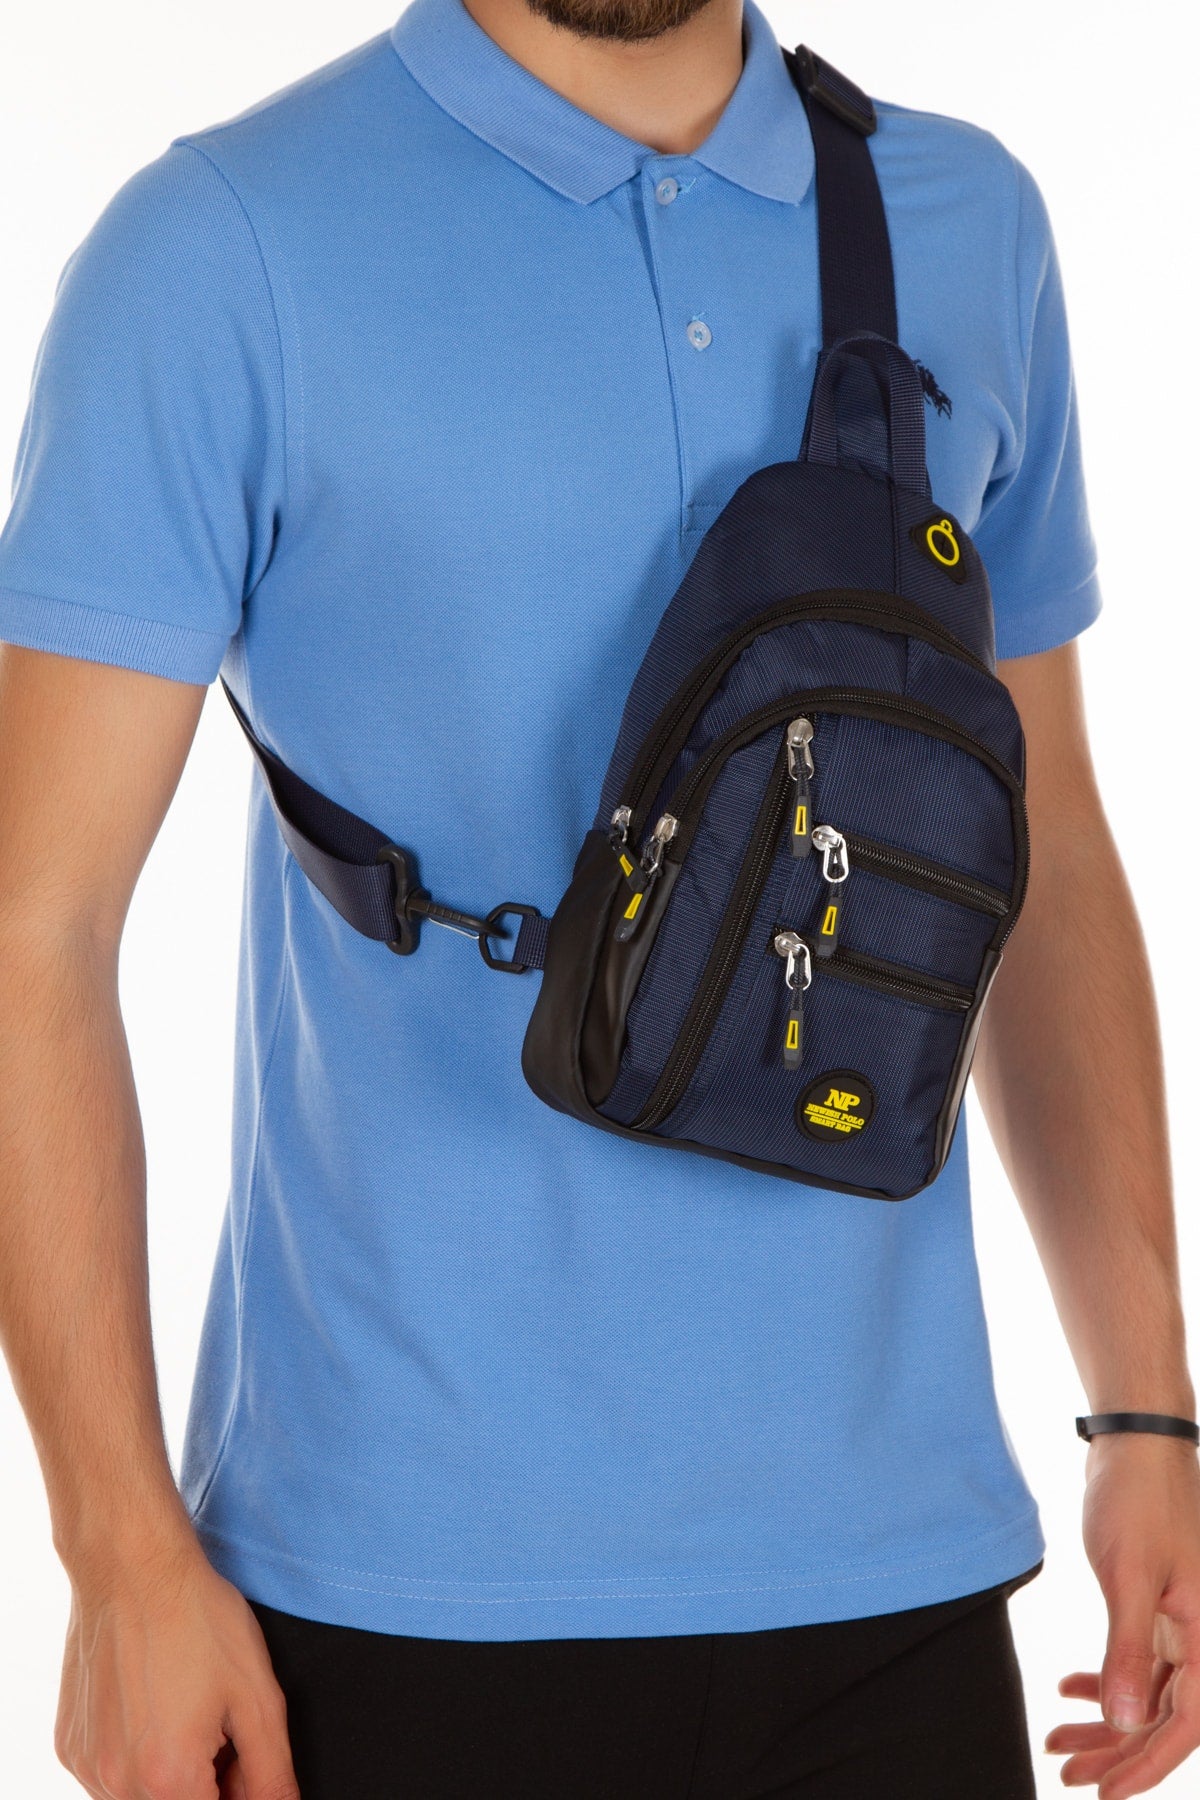 Unisex İmperteks Cross Shoulder and Waist Bag Suitable for Travel and Sports Use